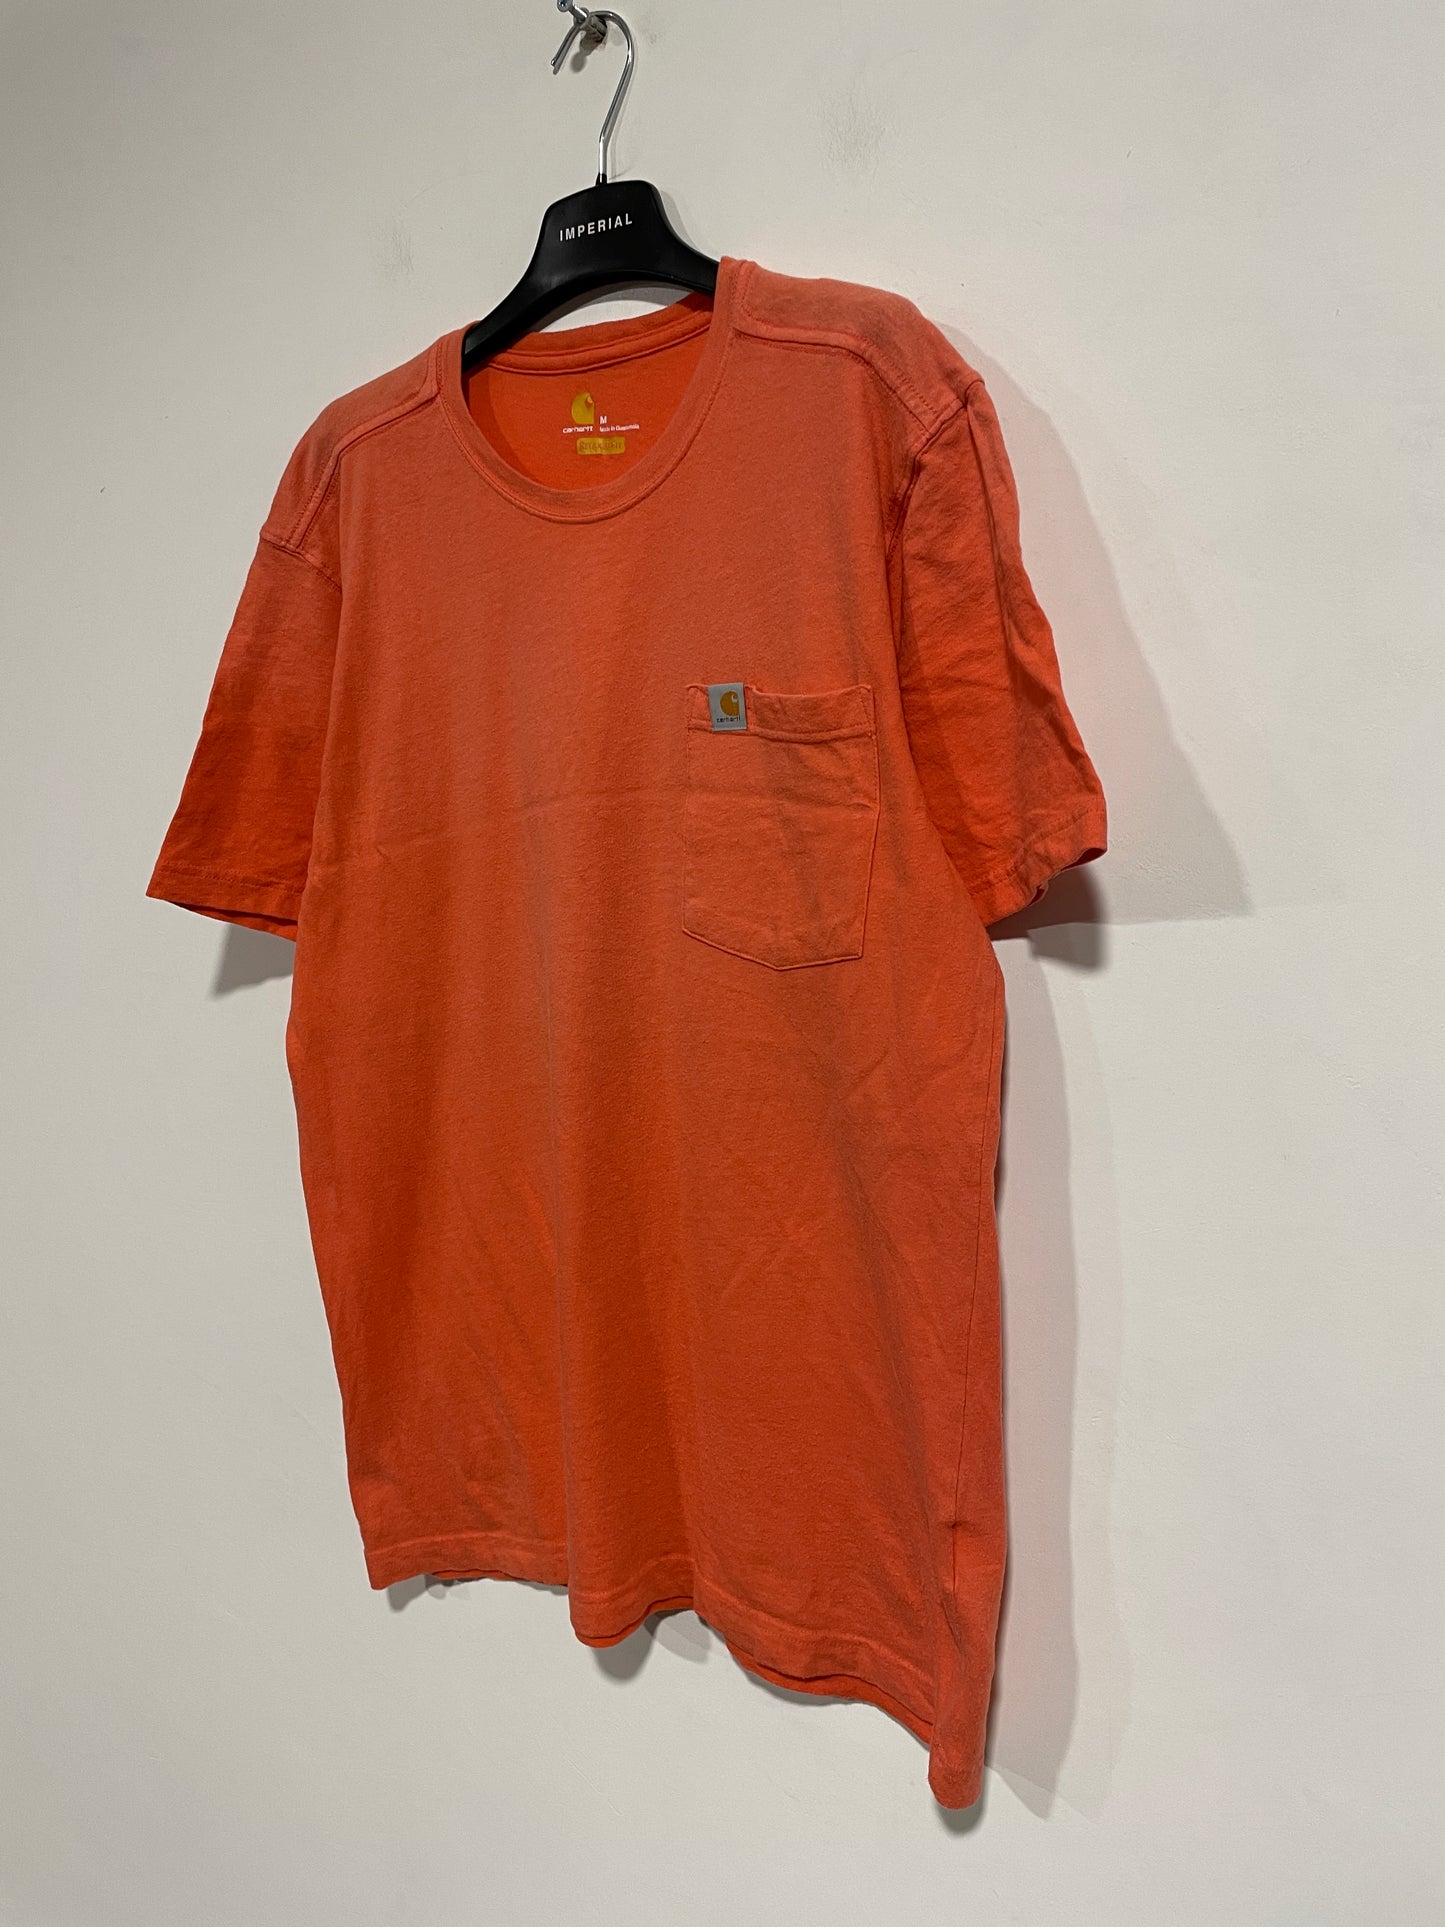 T shirt Carhartt workwear (MR121)